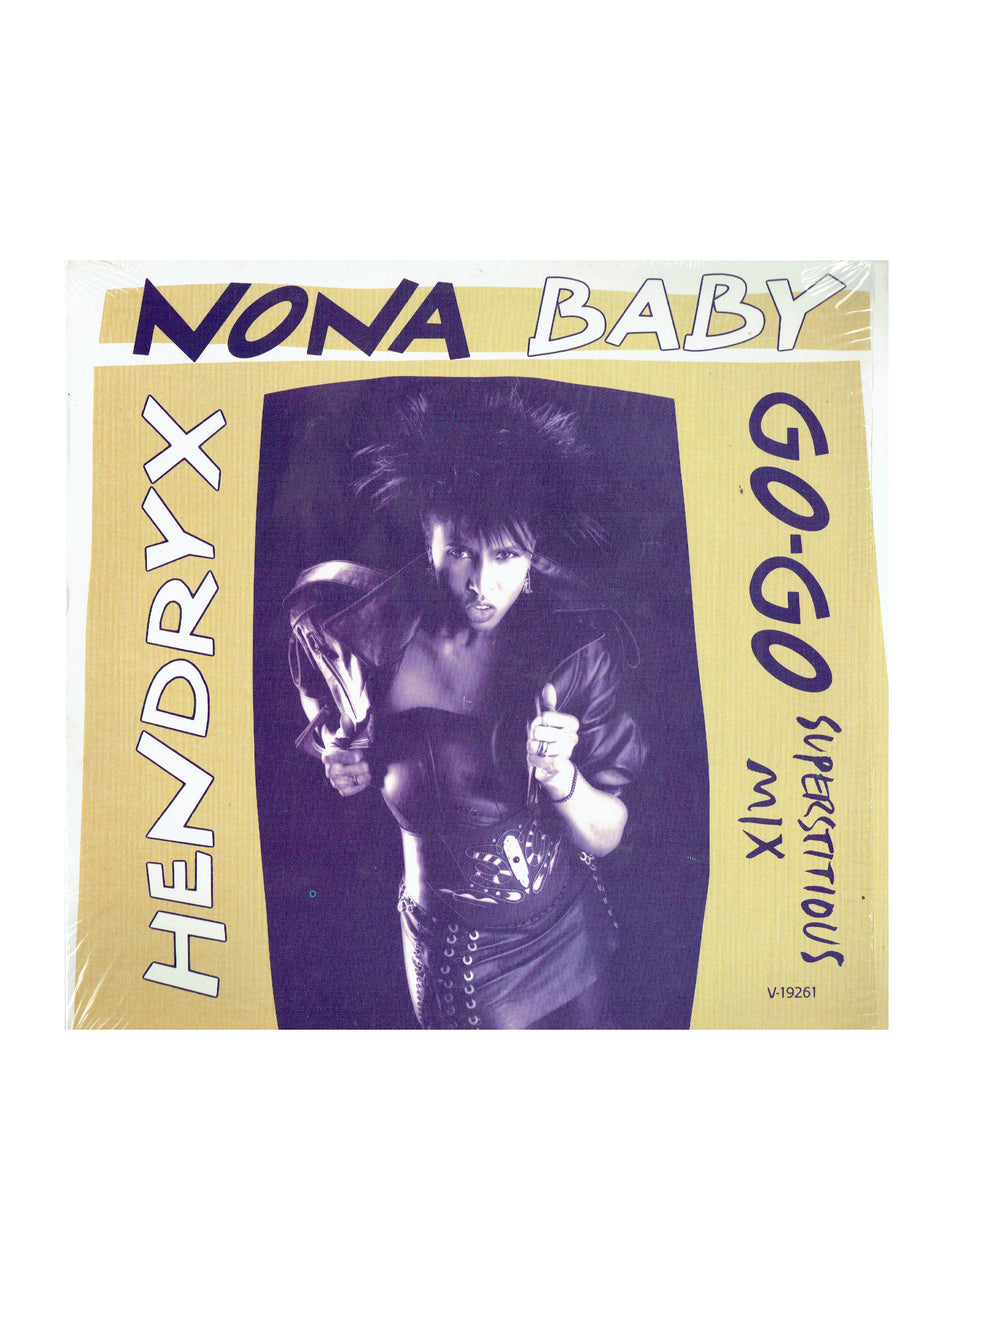 Prince – Nona Hendryx Baby Go-Go (Written By Prince) Vinyl 12" Maxi Single US Preloved: 1987